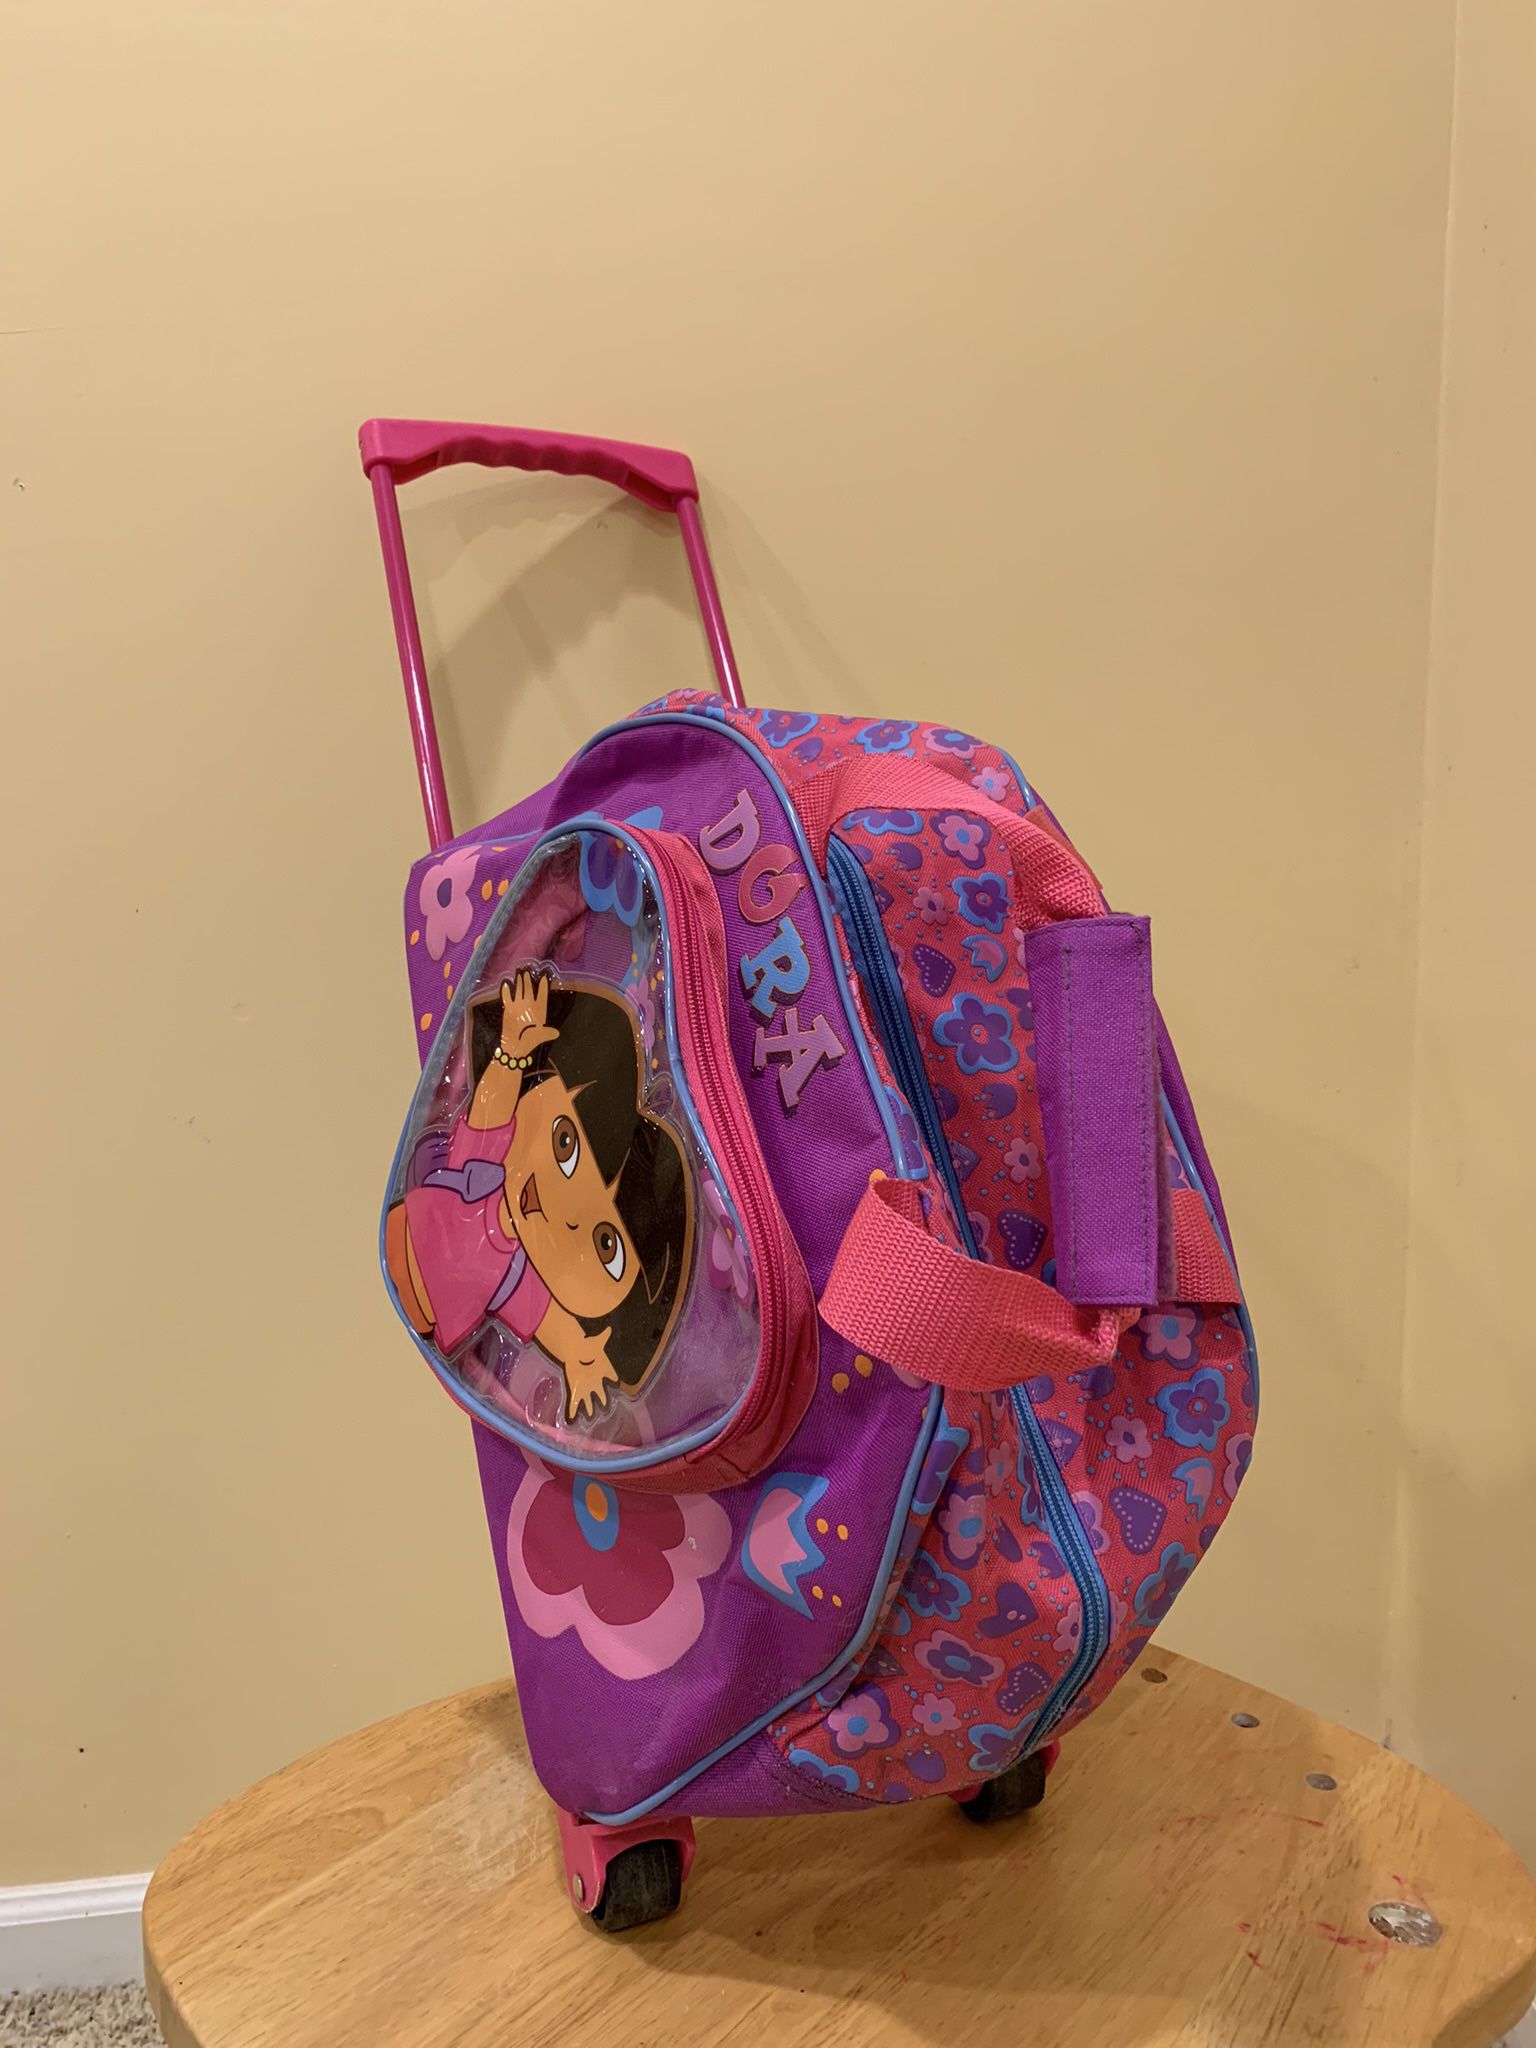 Dora The Explorer Rolling Bag